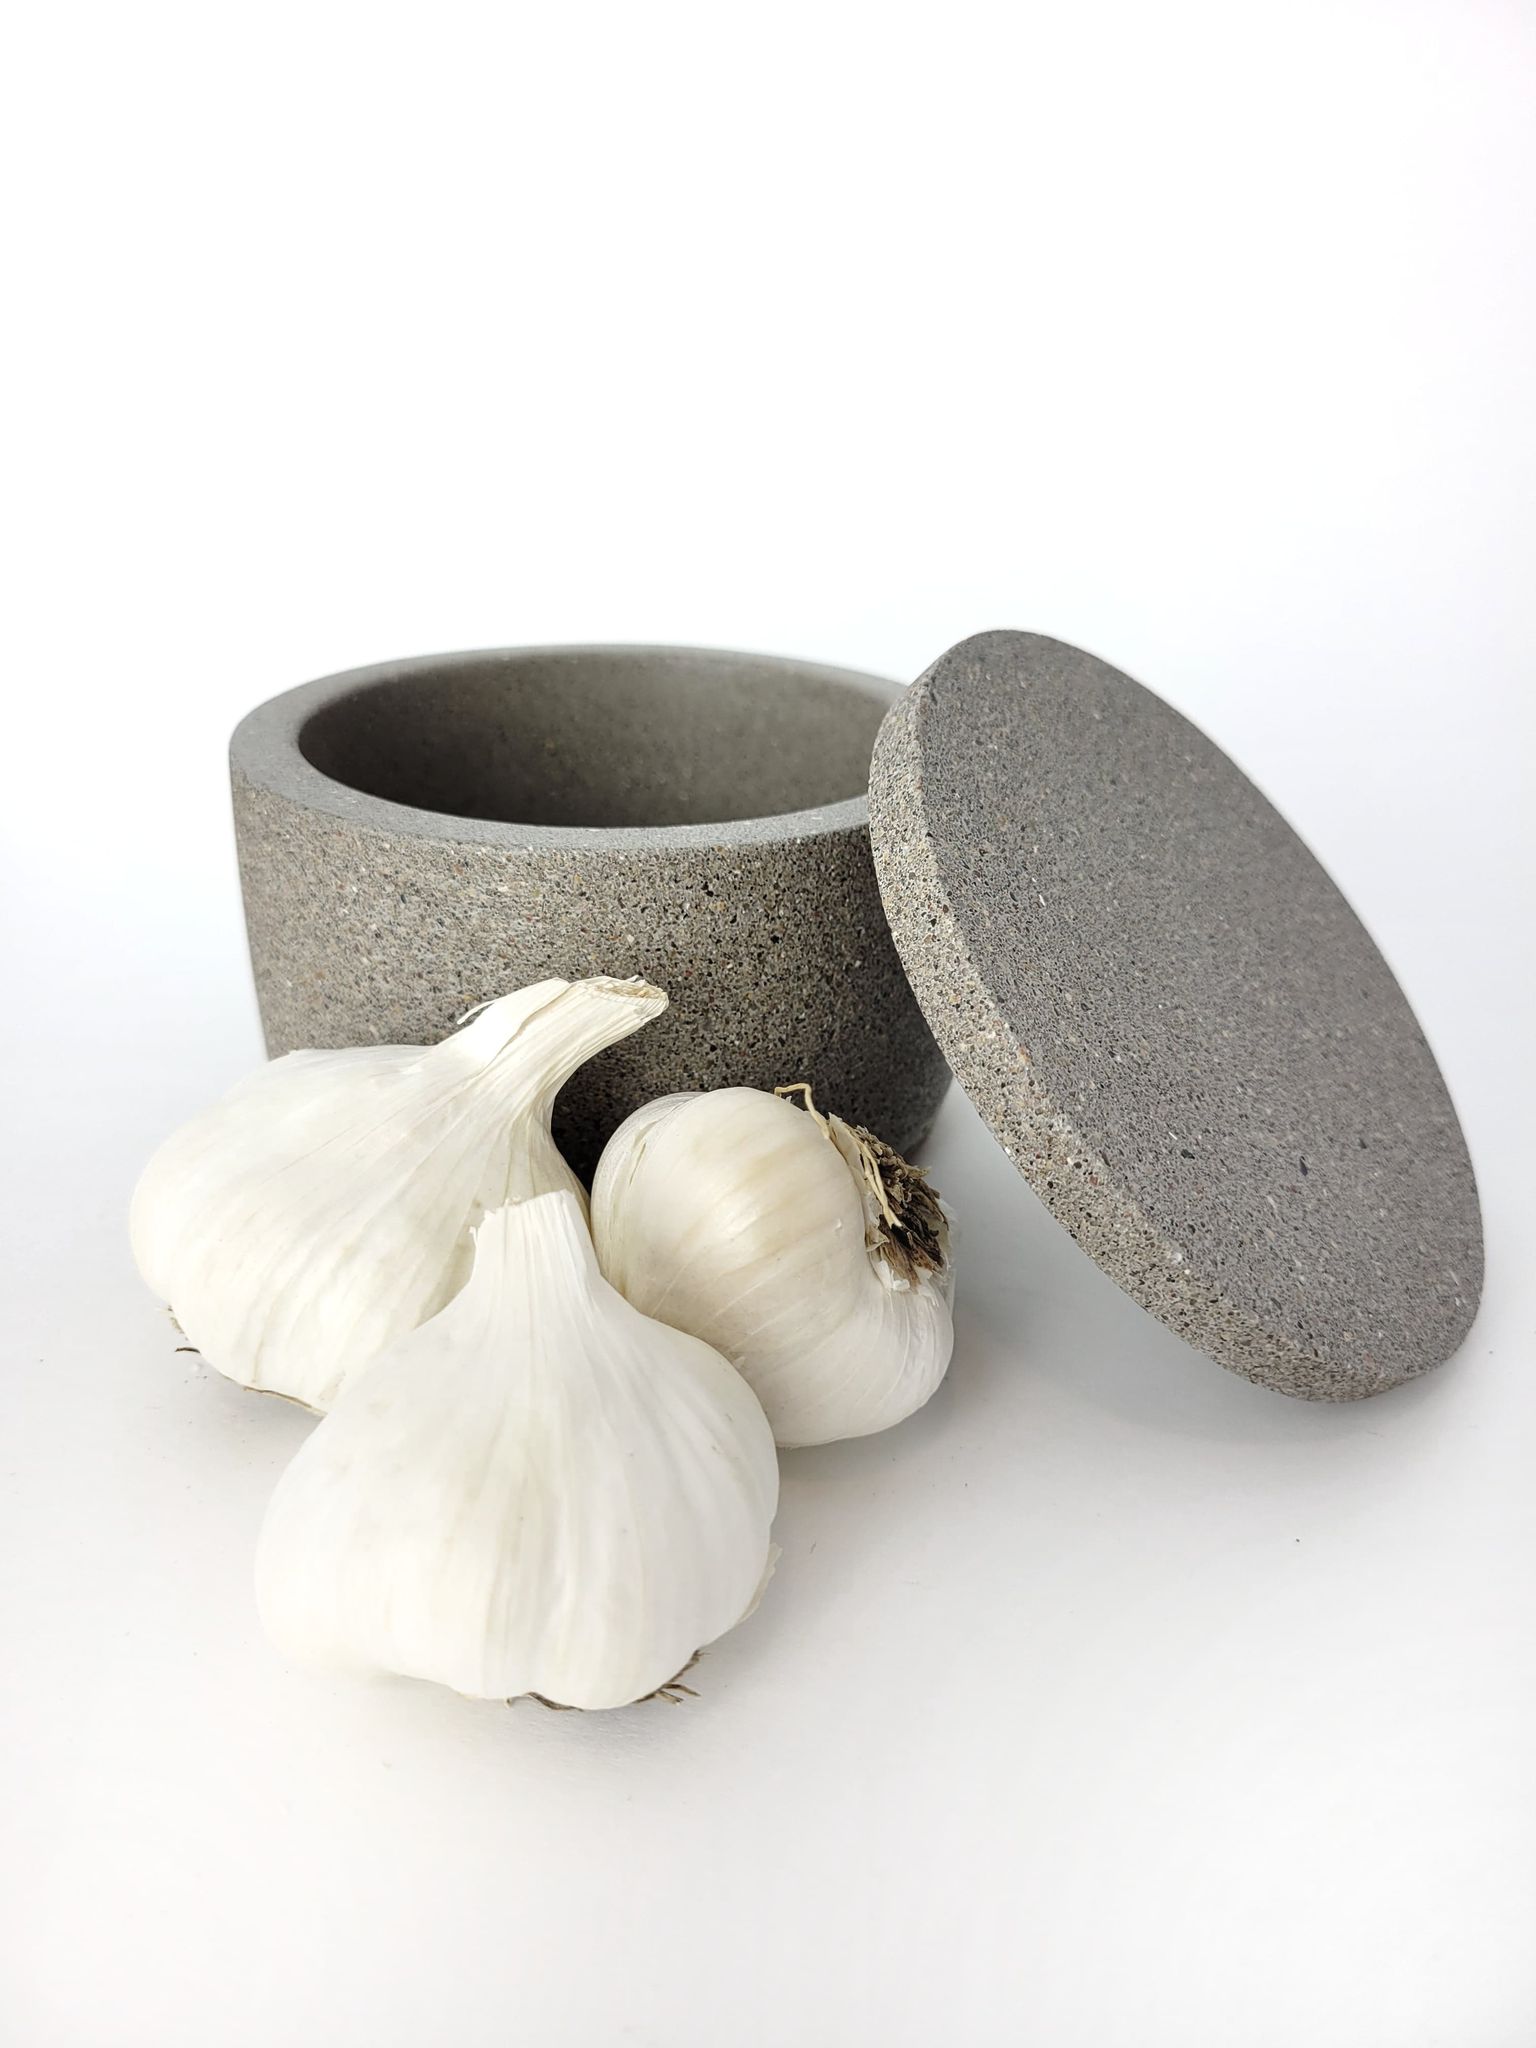 Sandstone Garlic Saver Bowl with Lid